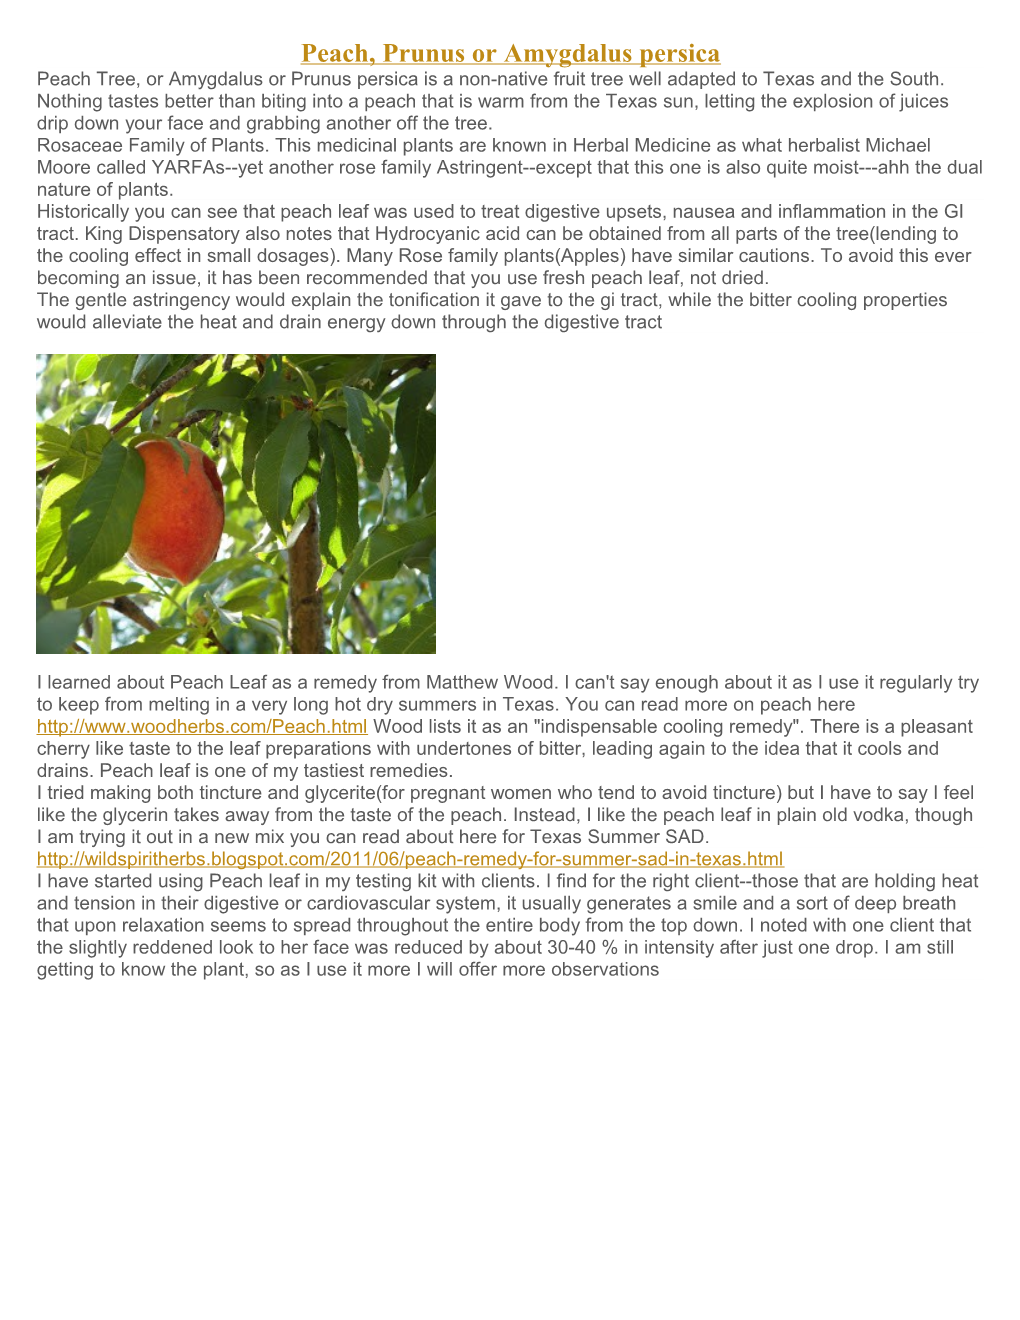 Peach, Prunus Or Amygdaluspersica